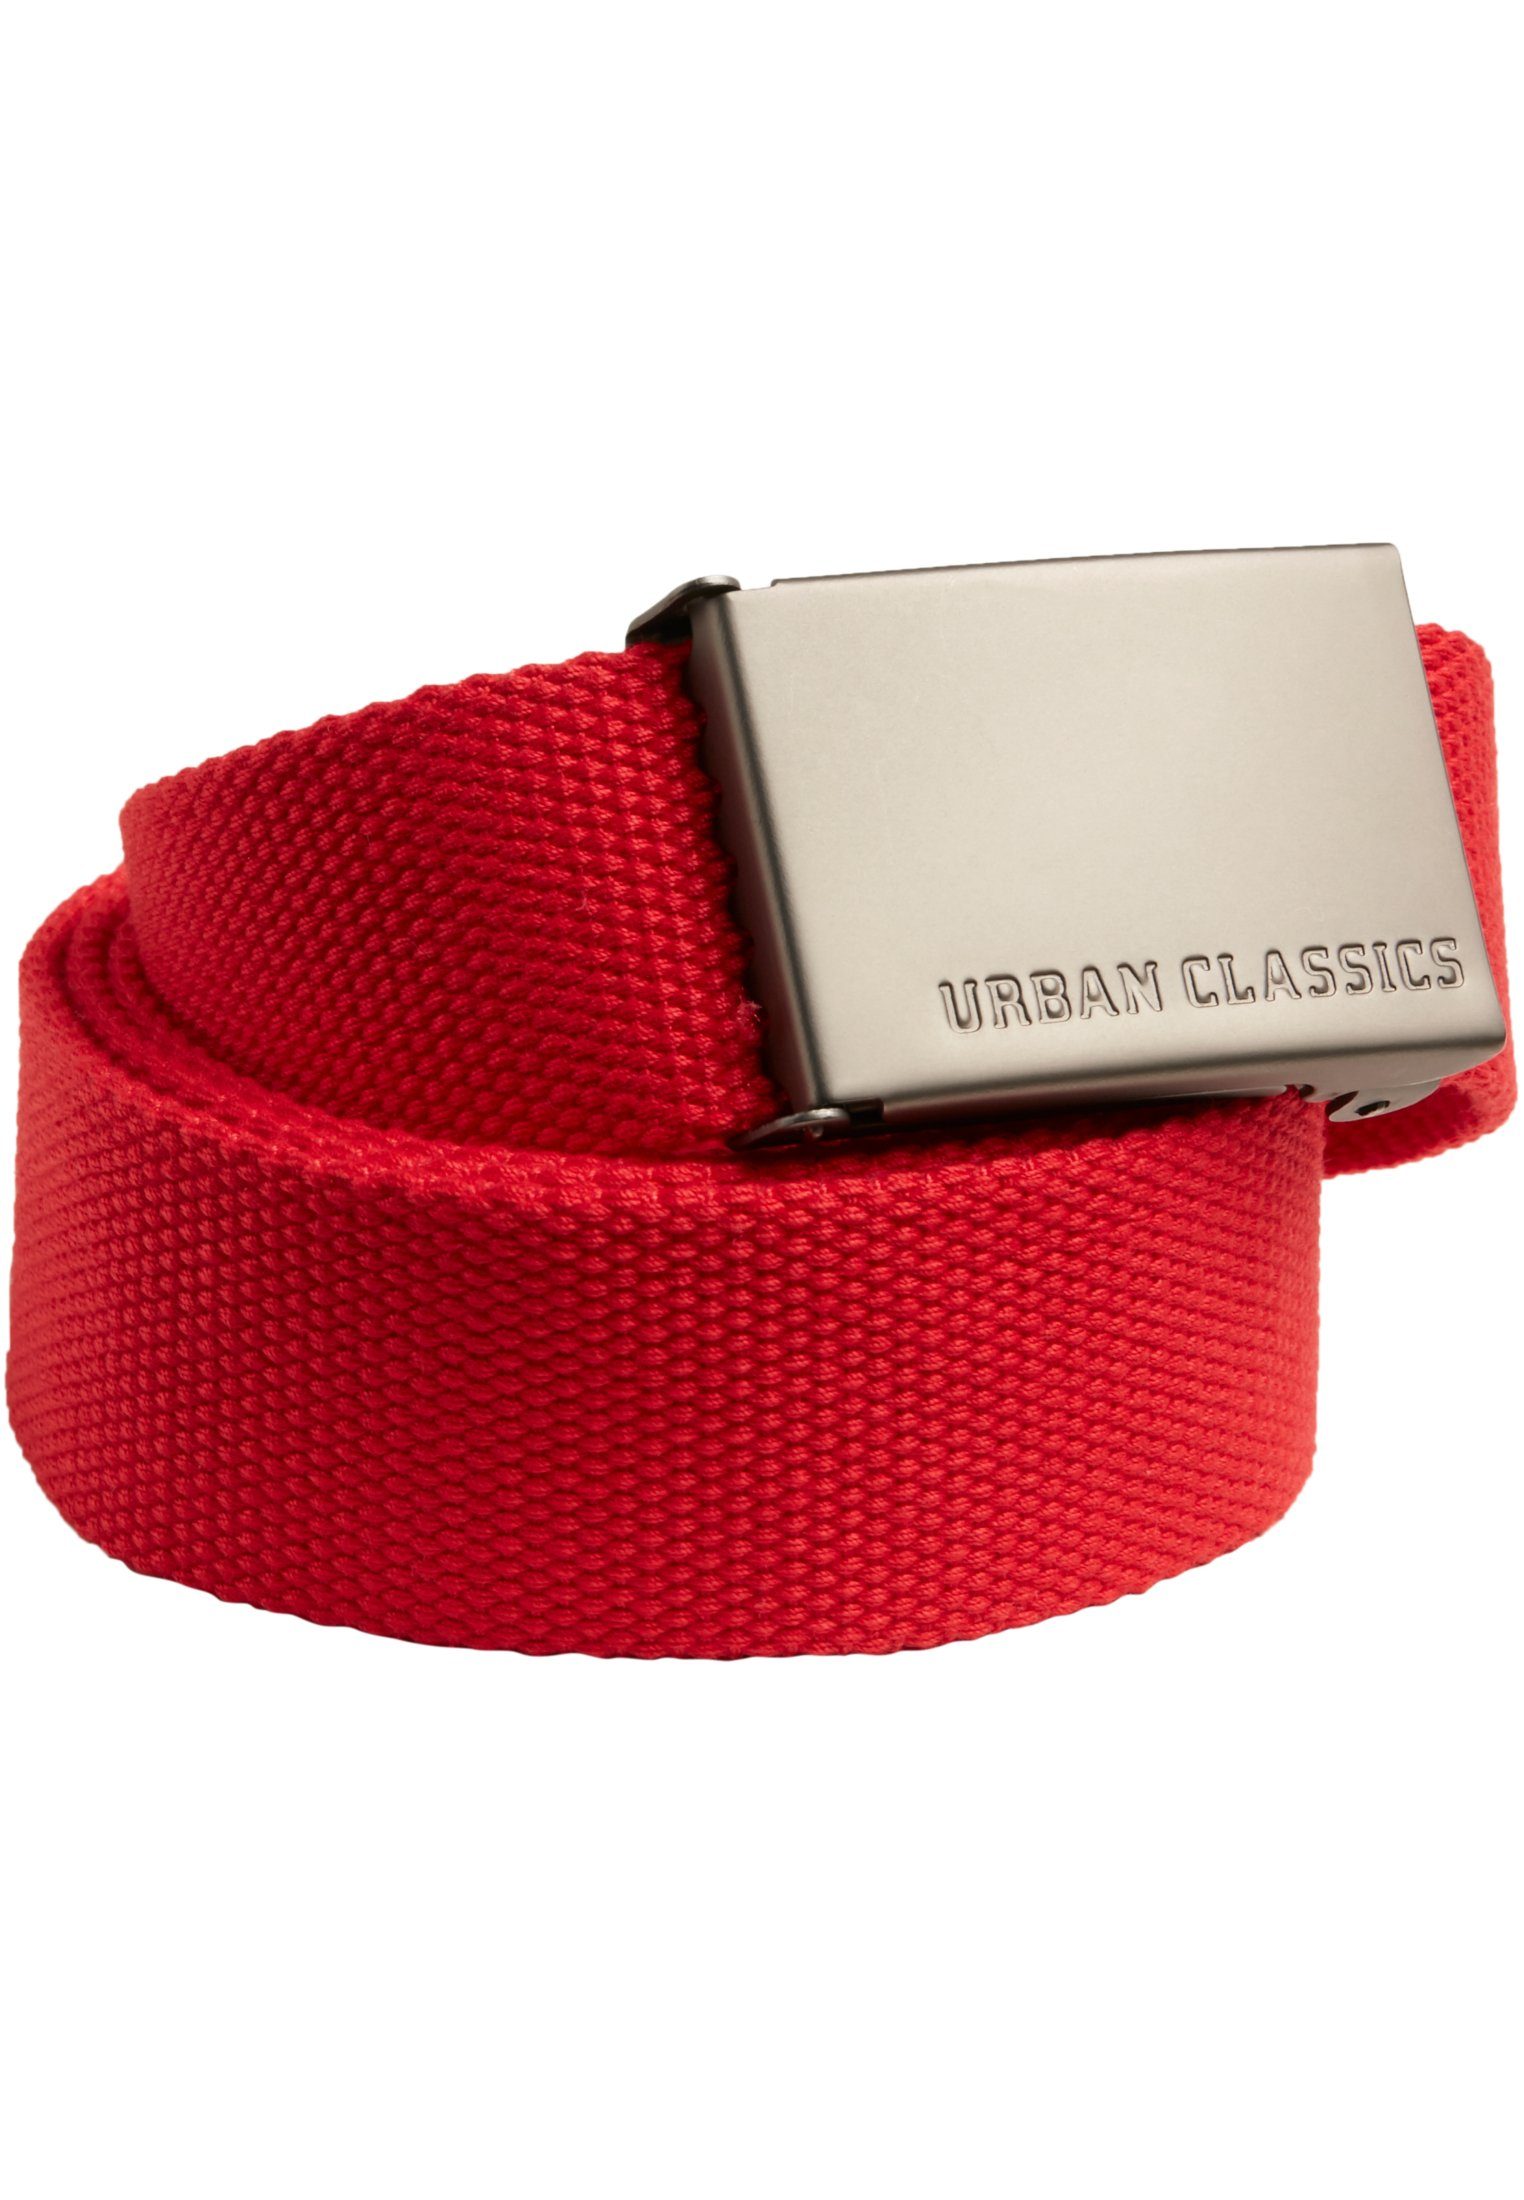 CLASSICS Belts Canvas URBAN Accessoires red Hüftgürtel